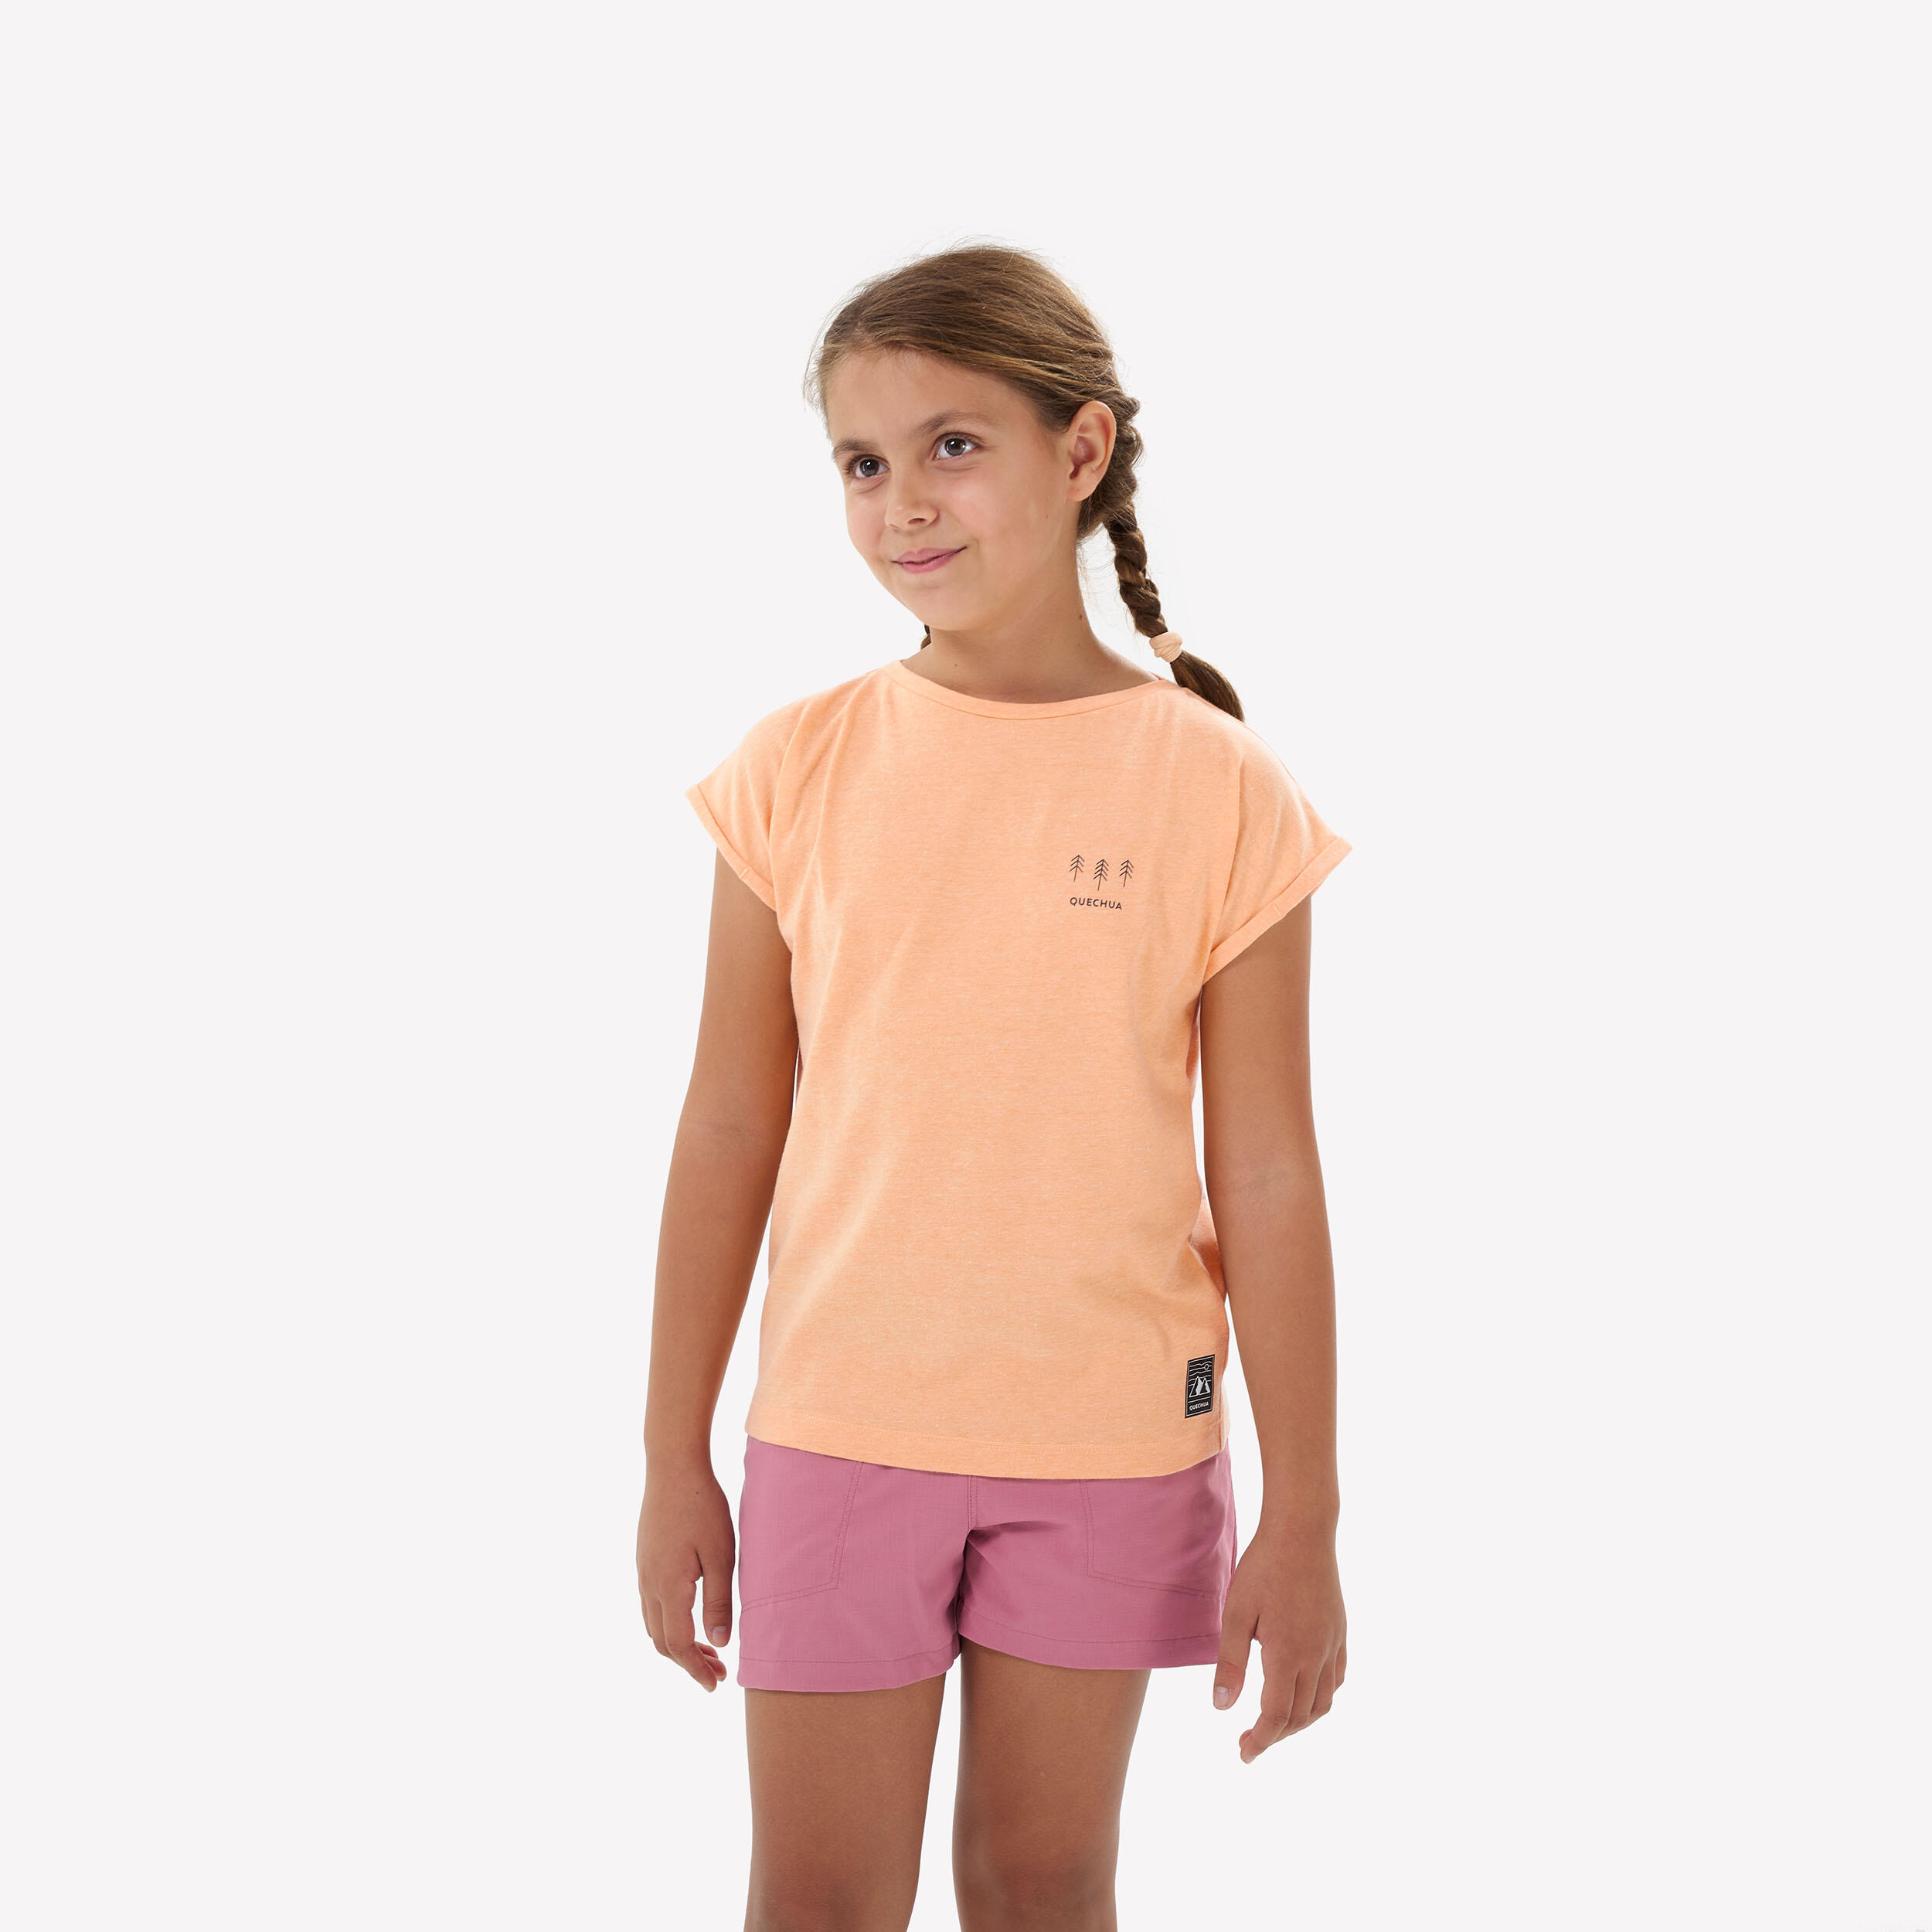 Girls’ Hiking T-shirt - MH100 Ages 7-15 - Orange 1/6